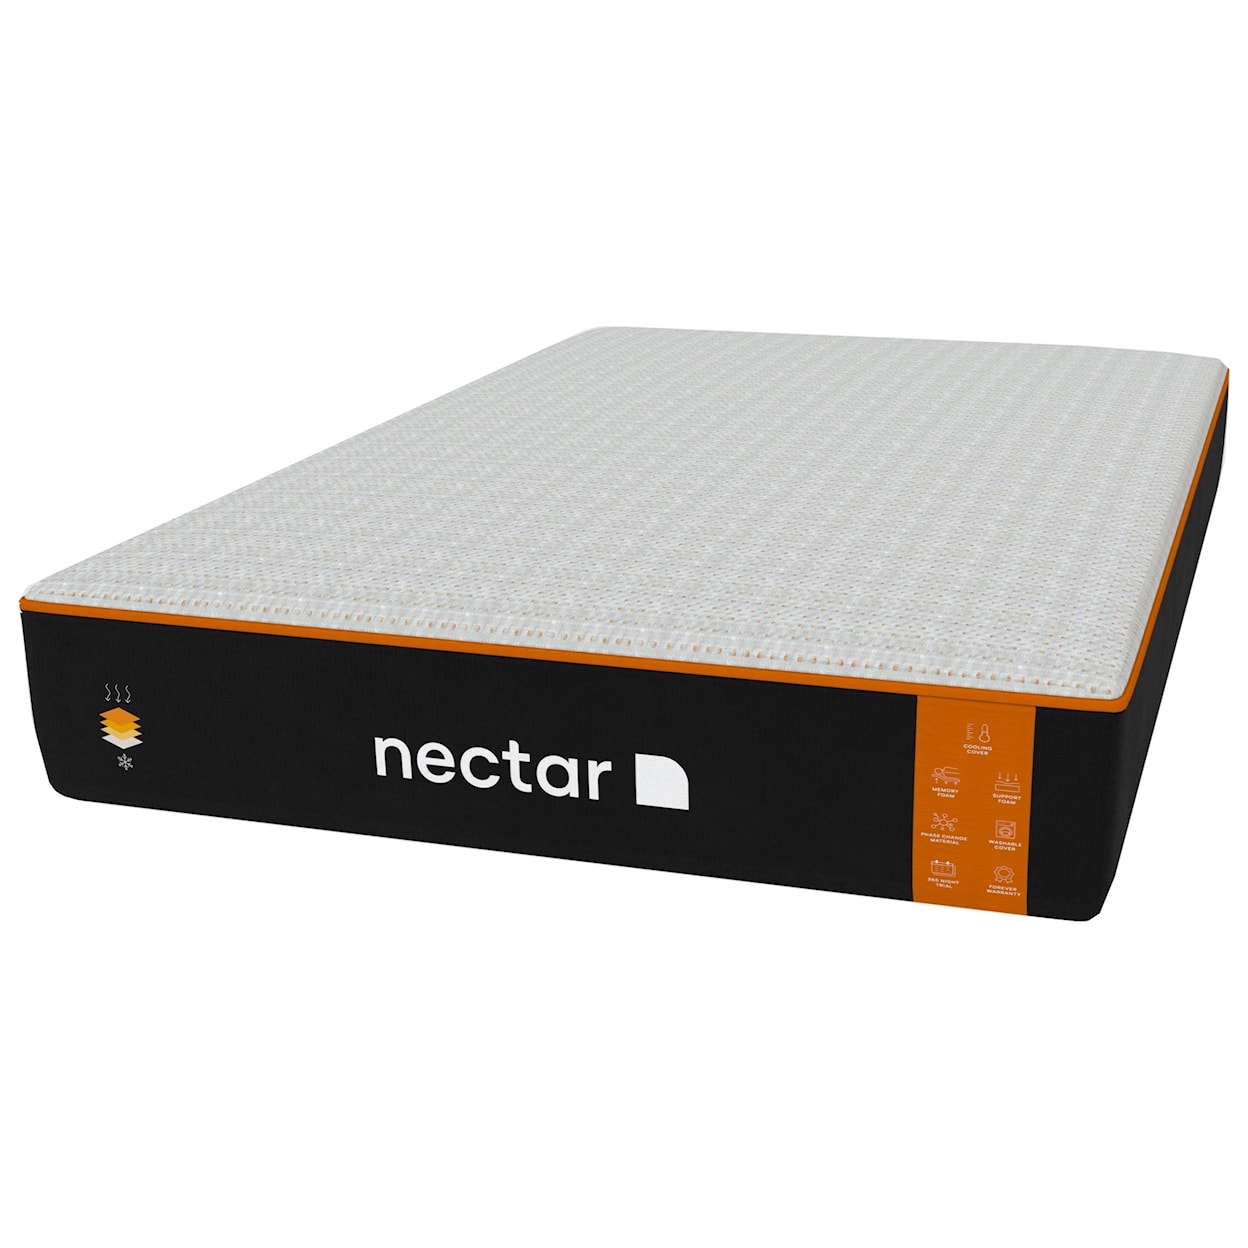 Nectar Nectar Premier Copper Cal King 14" Gel Memory Foam Mattress